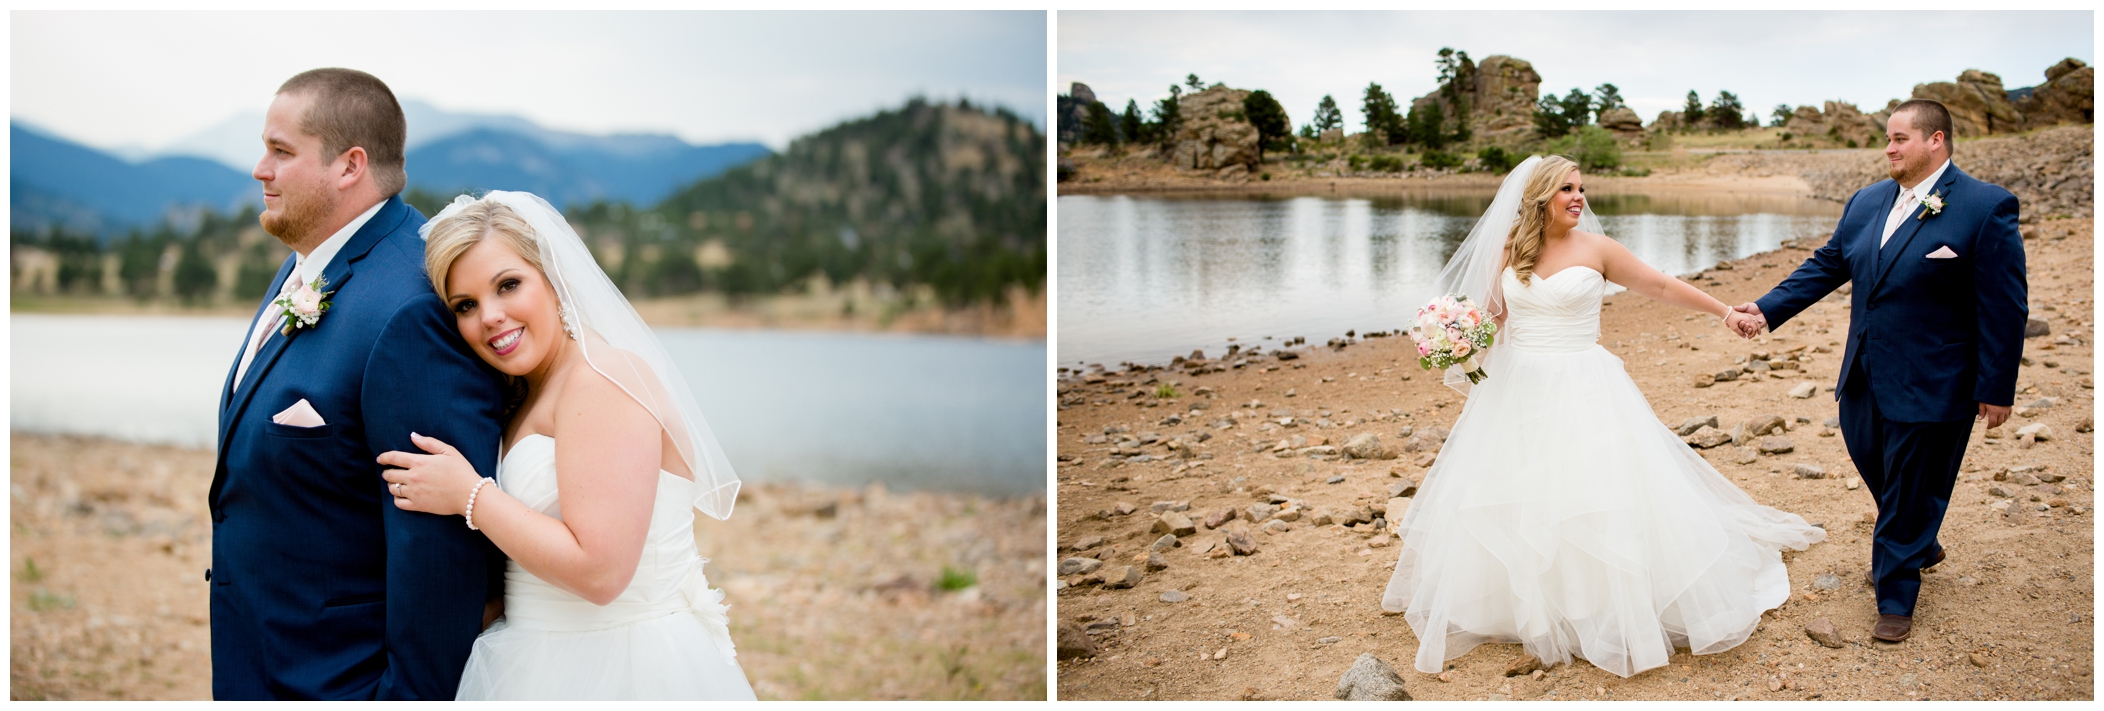 Colorado wedding photography at Mary's Lake Lodge